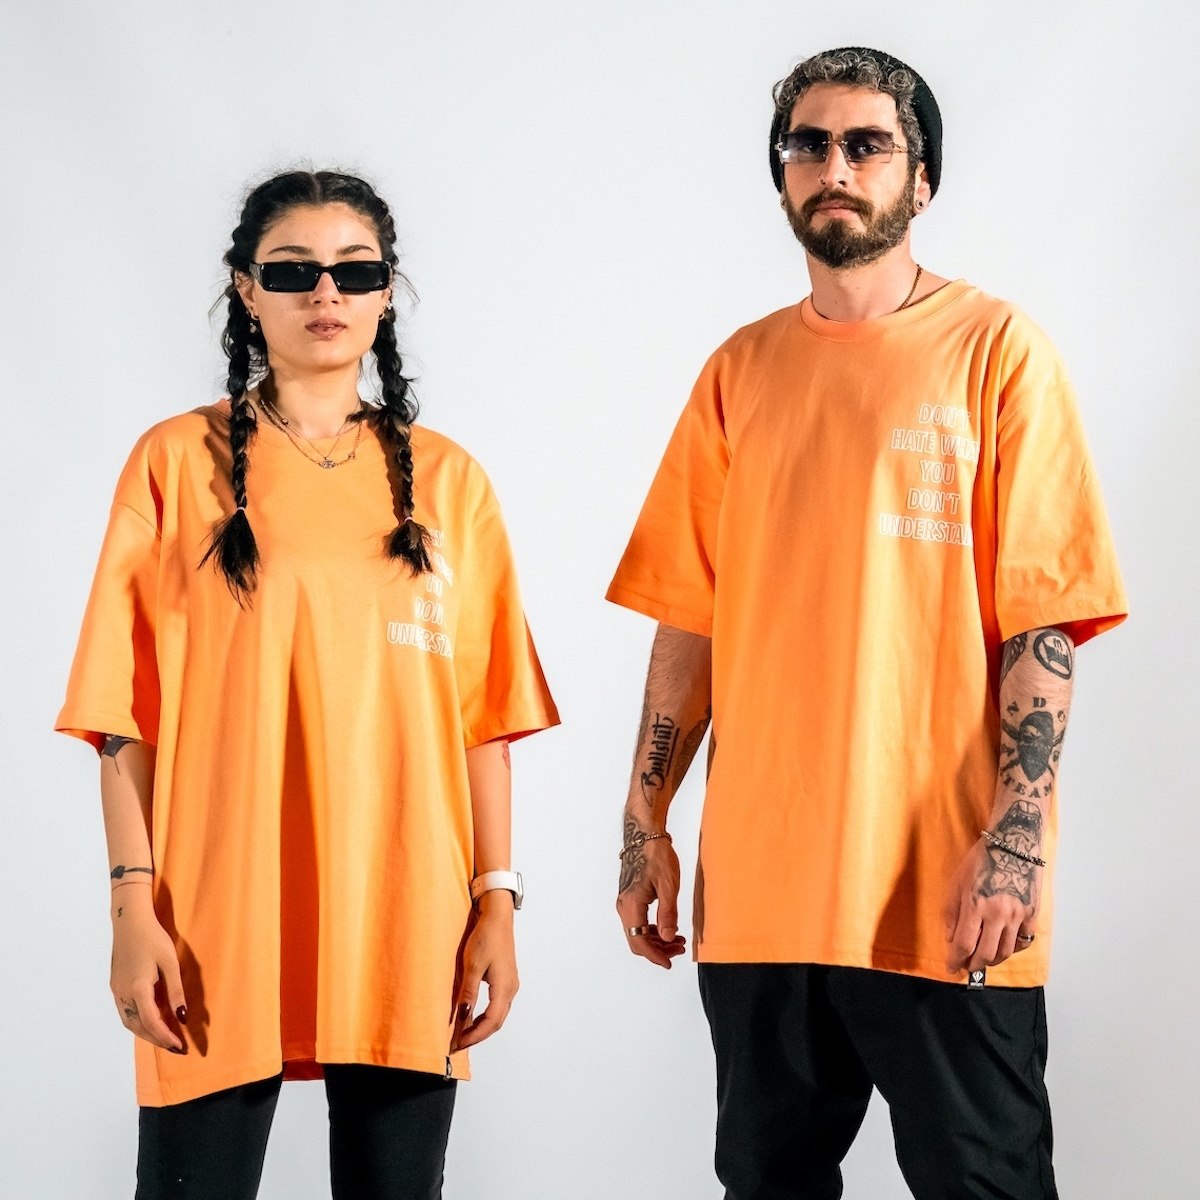 Men's Text Printed Oversize Orange T-shirt - 2